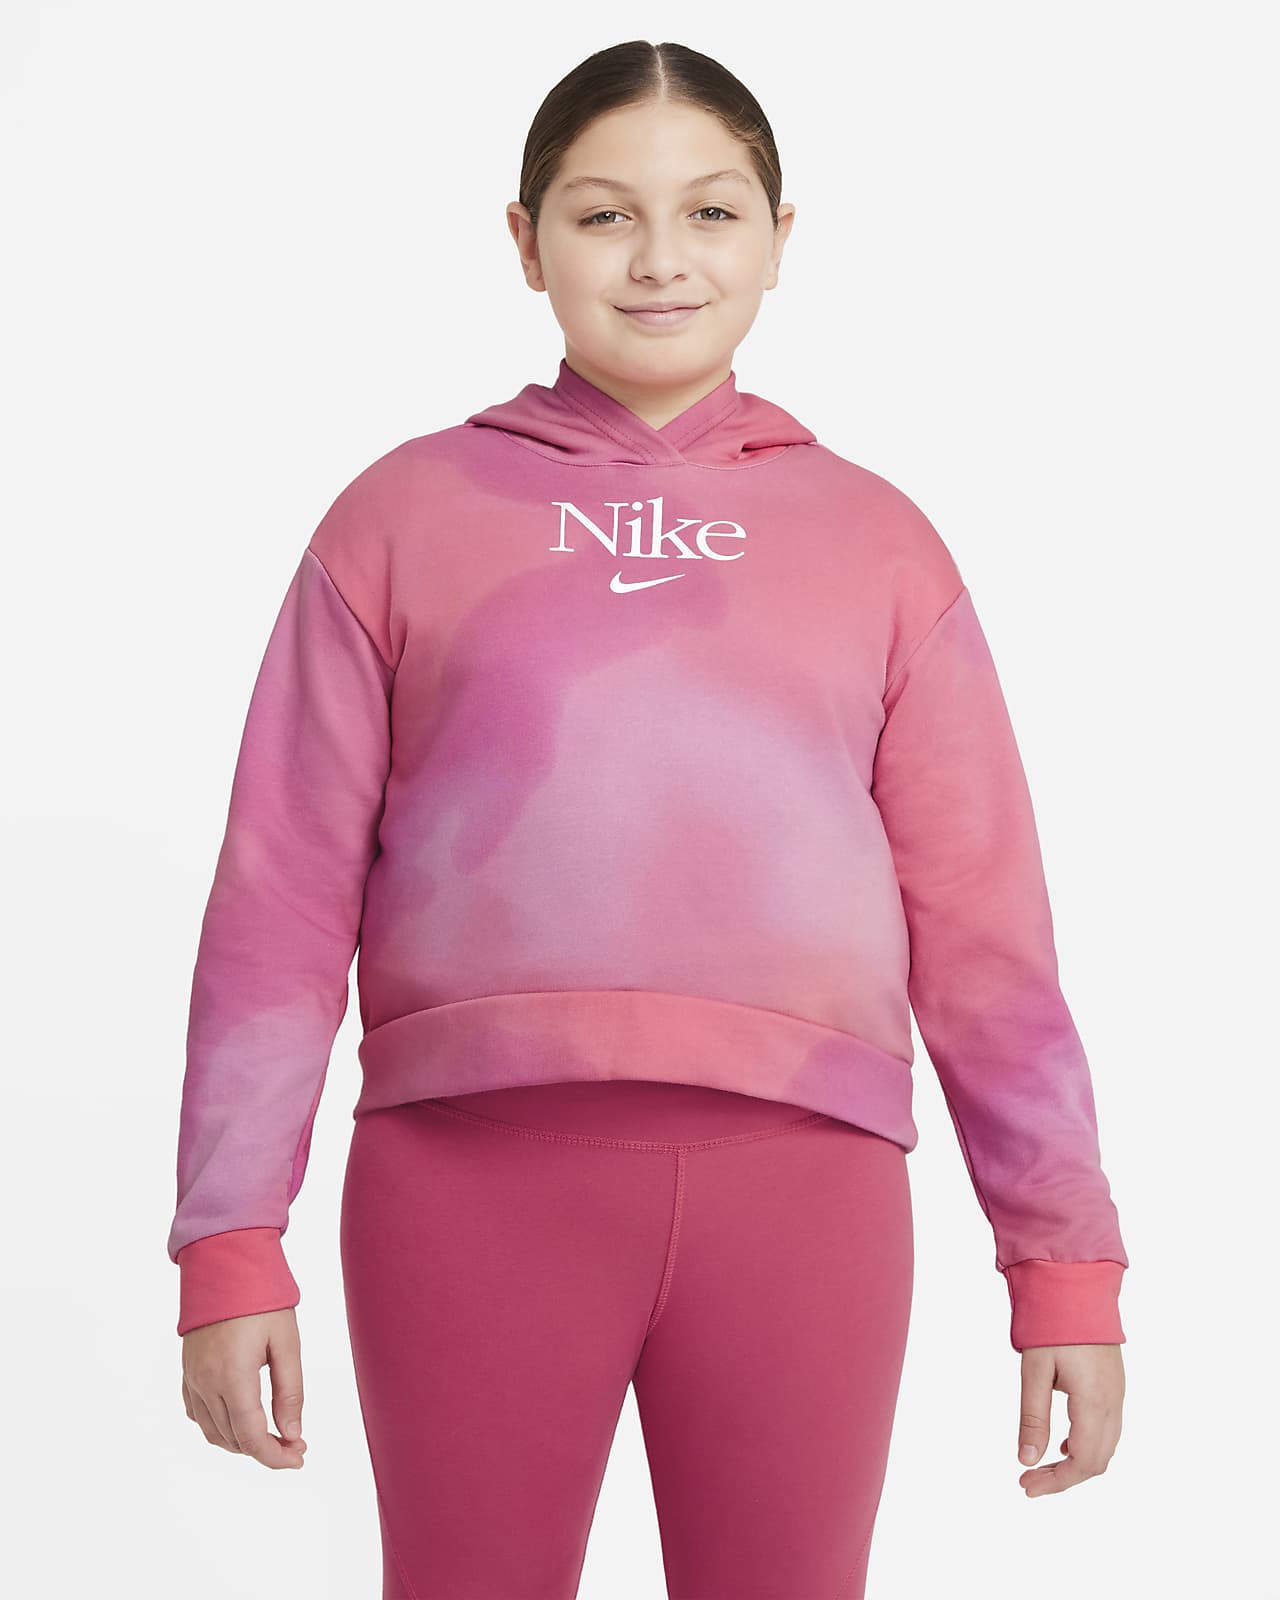 Hoodie pullover Nike Sportswear Júnior (Rapariga) (tamanhos grandes)